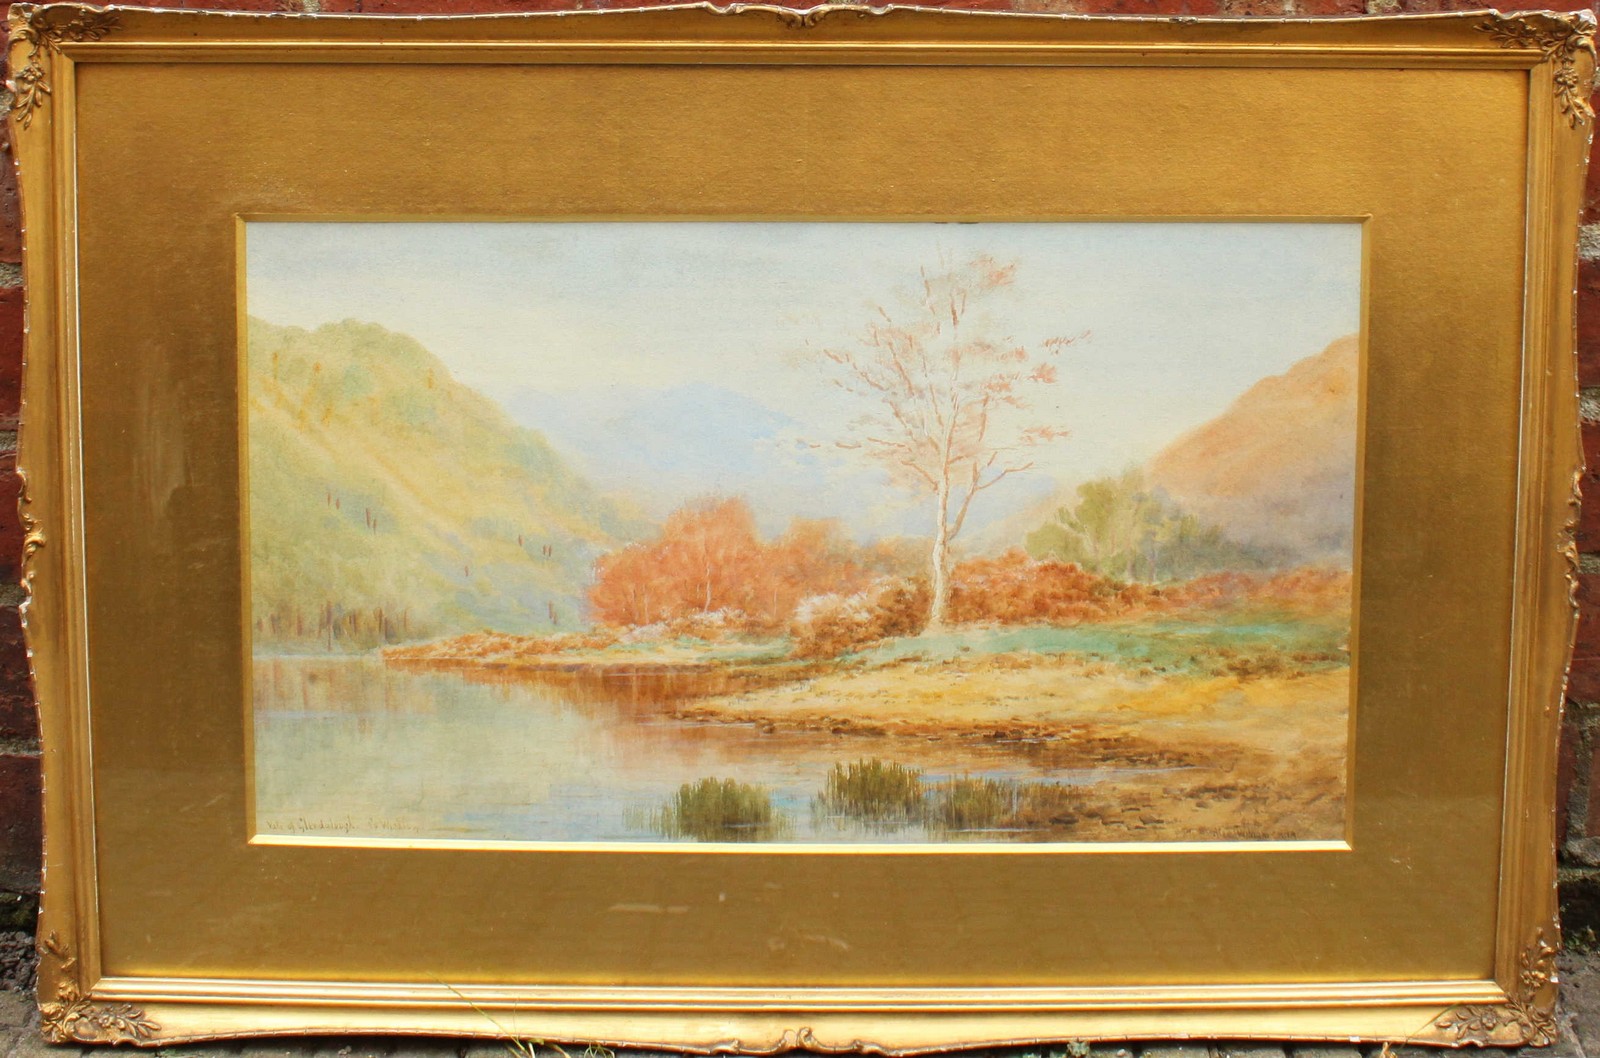 Alexander Williams RHA (1846-1930) 'Vale of Glendalough co. Wicklow' Landscape scene with